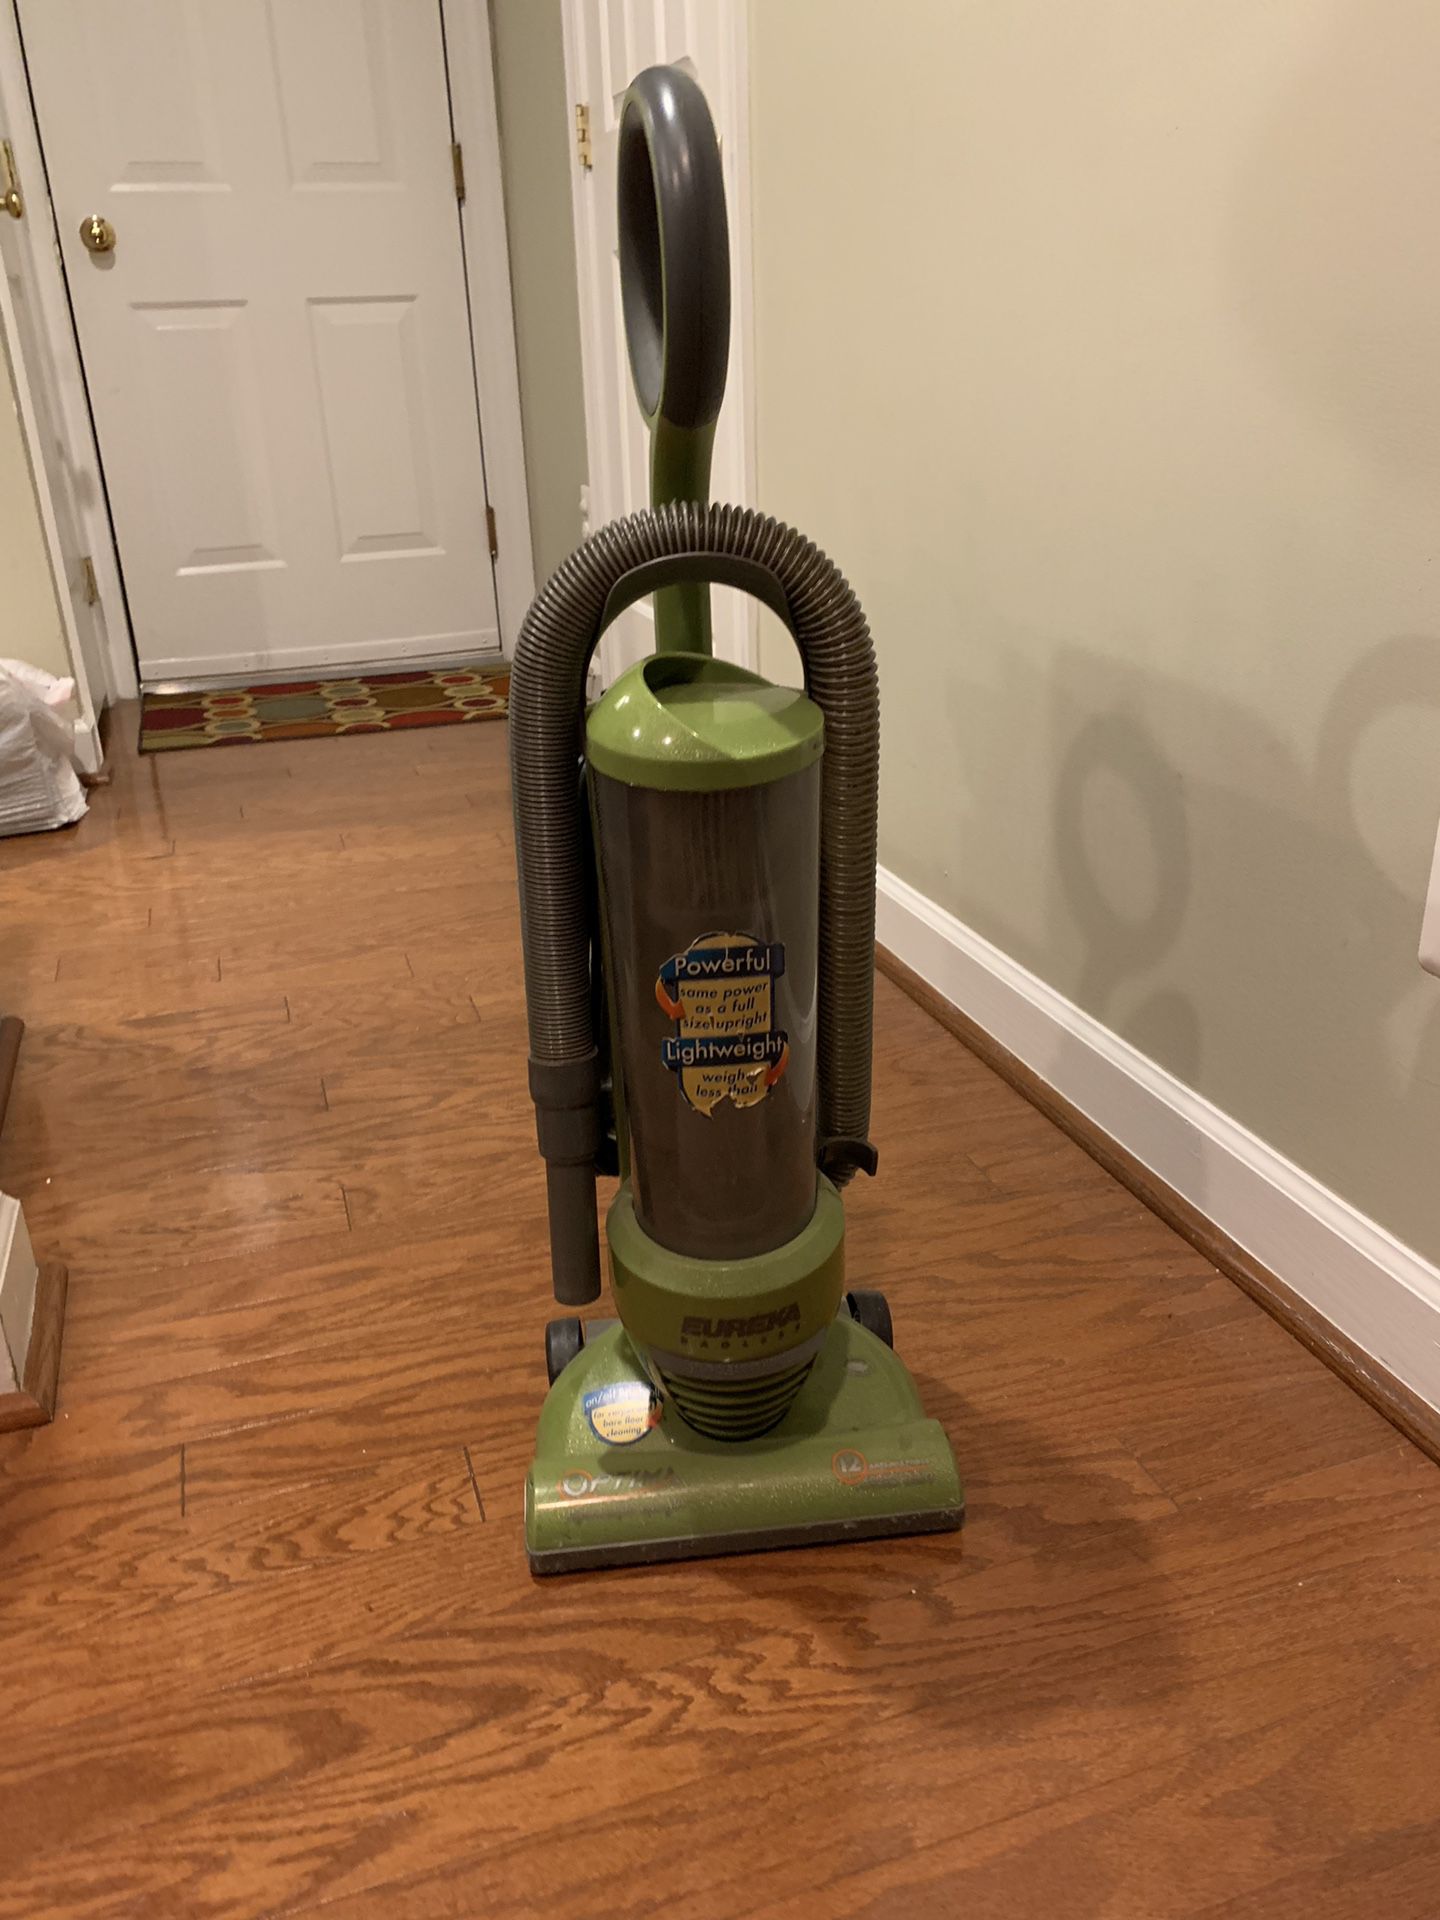 Eureka vacuum cleaner